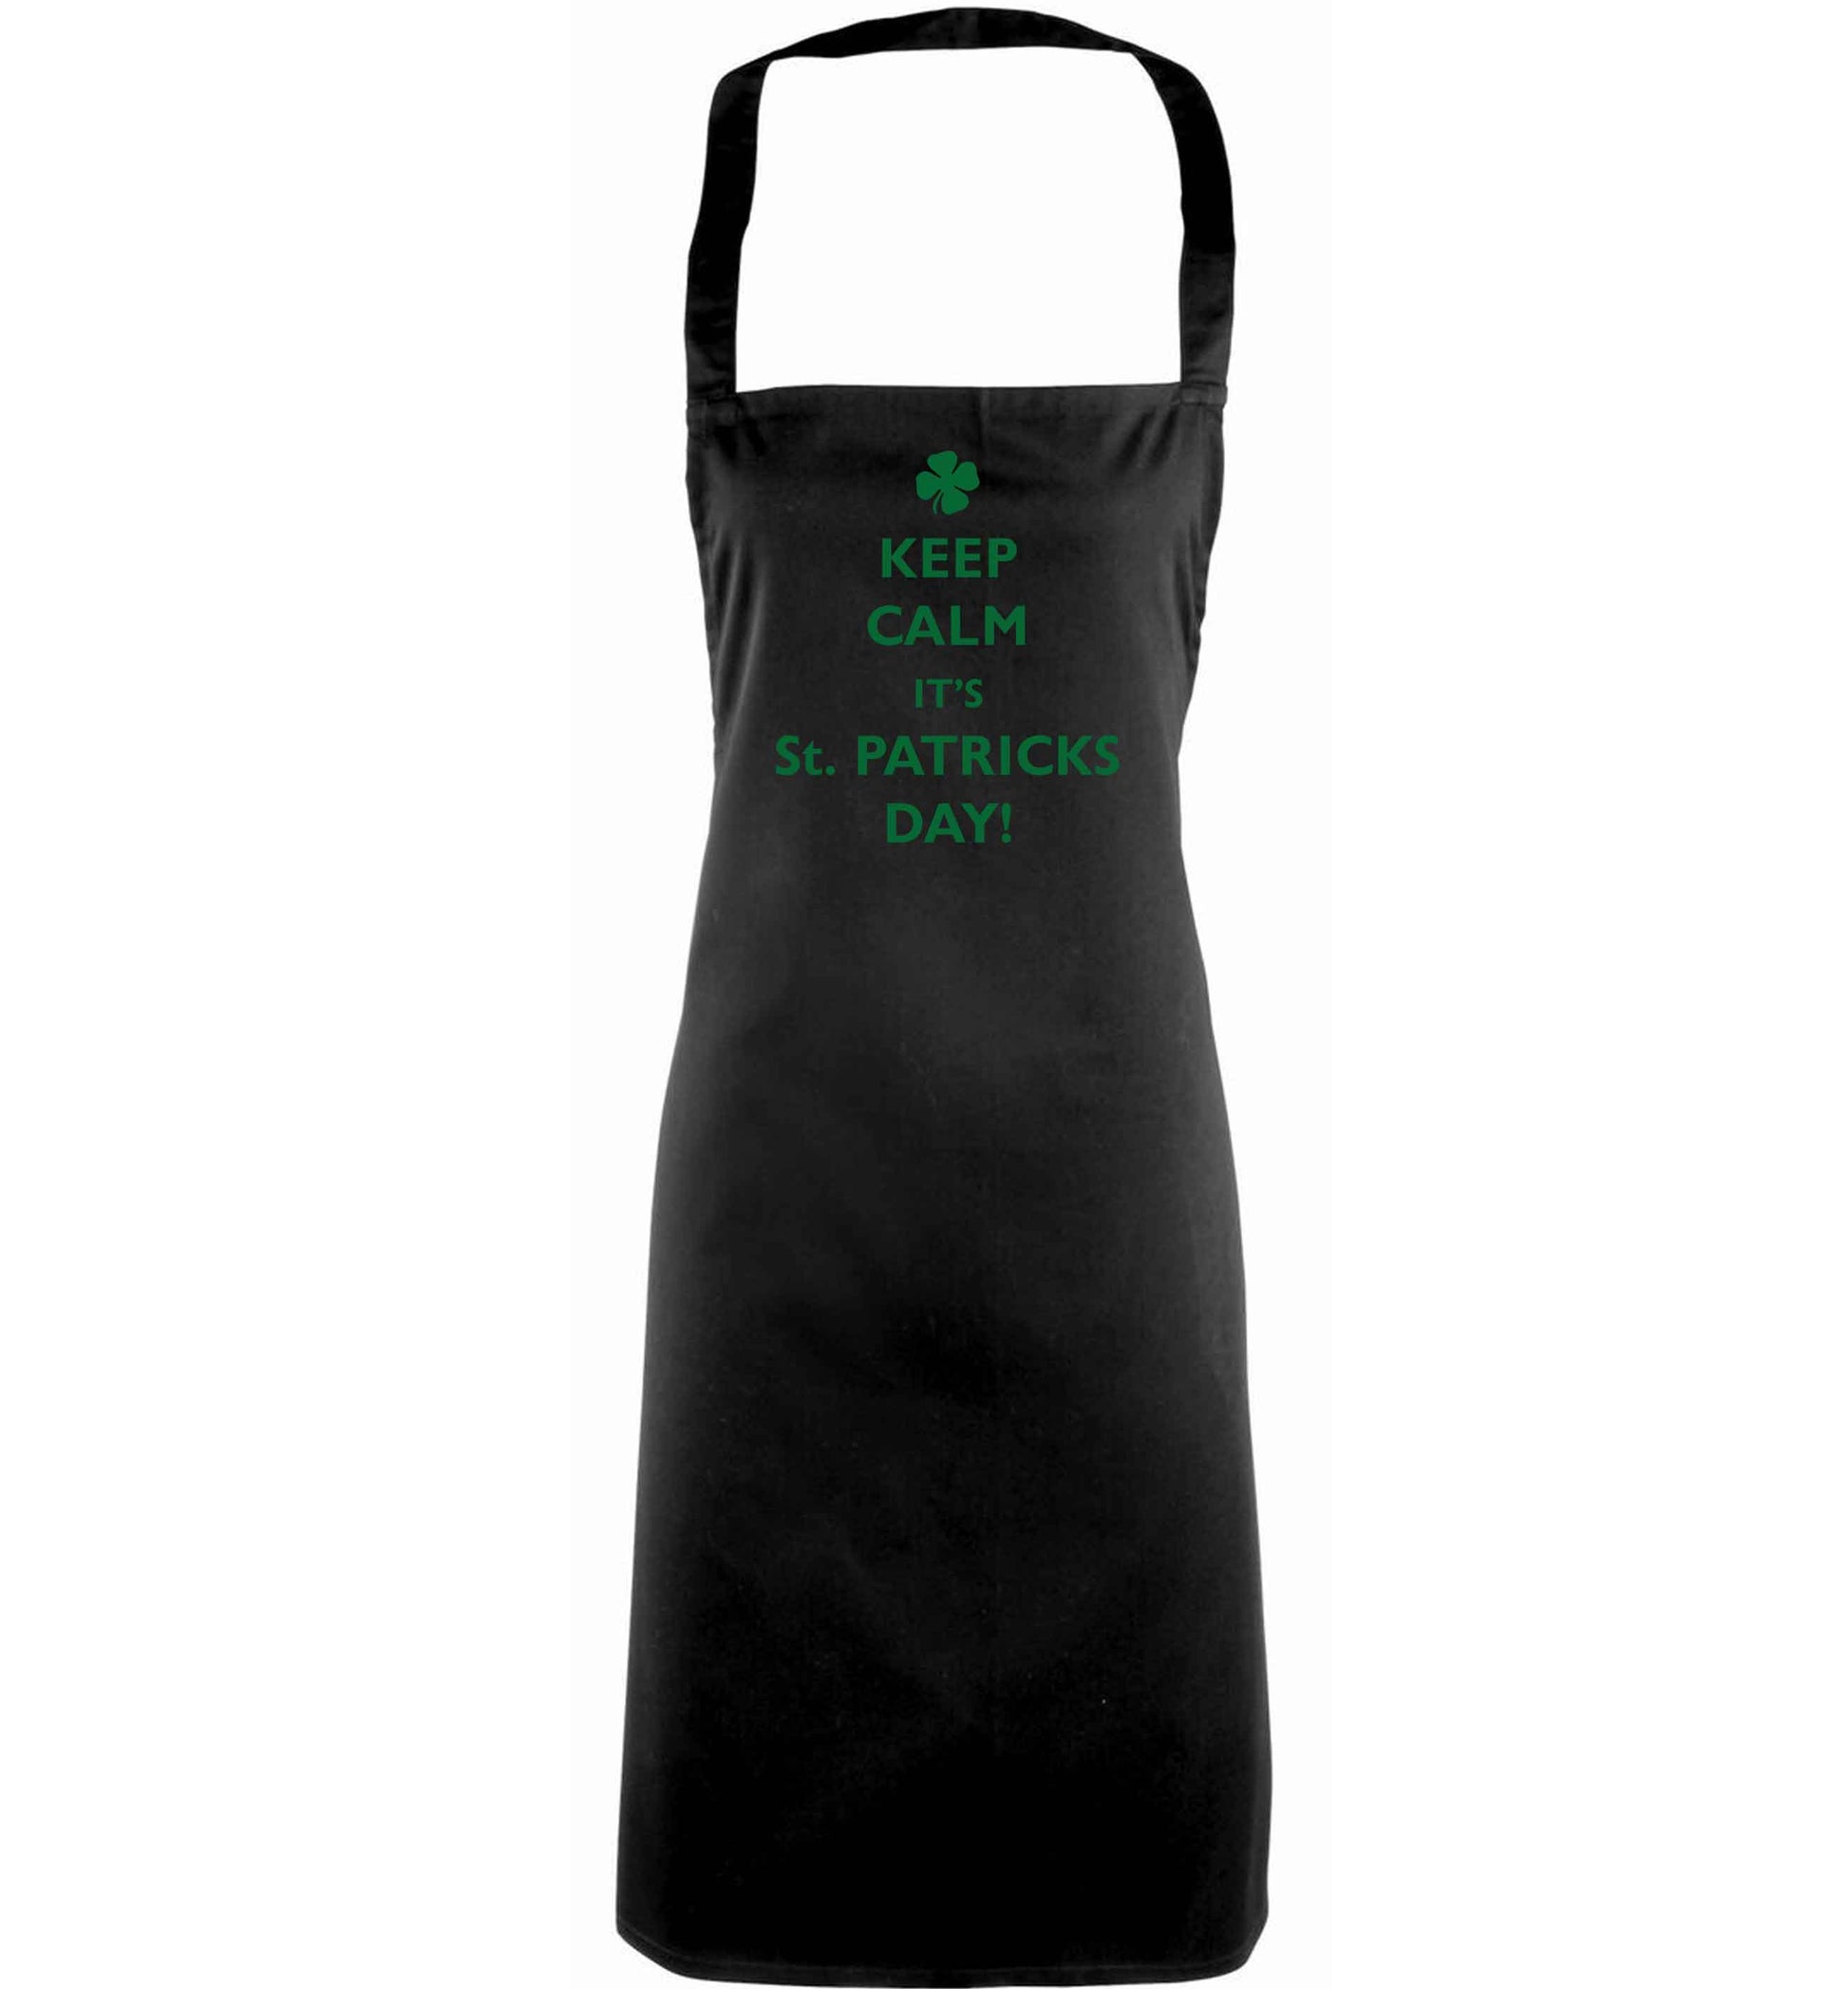 Keep calm it's St.Patricks day adults black apron